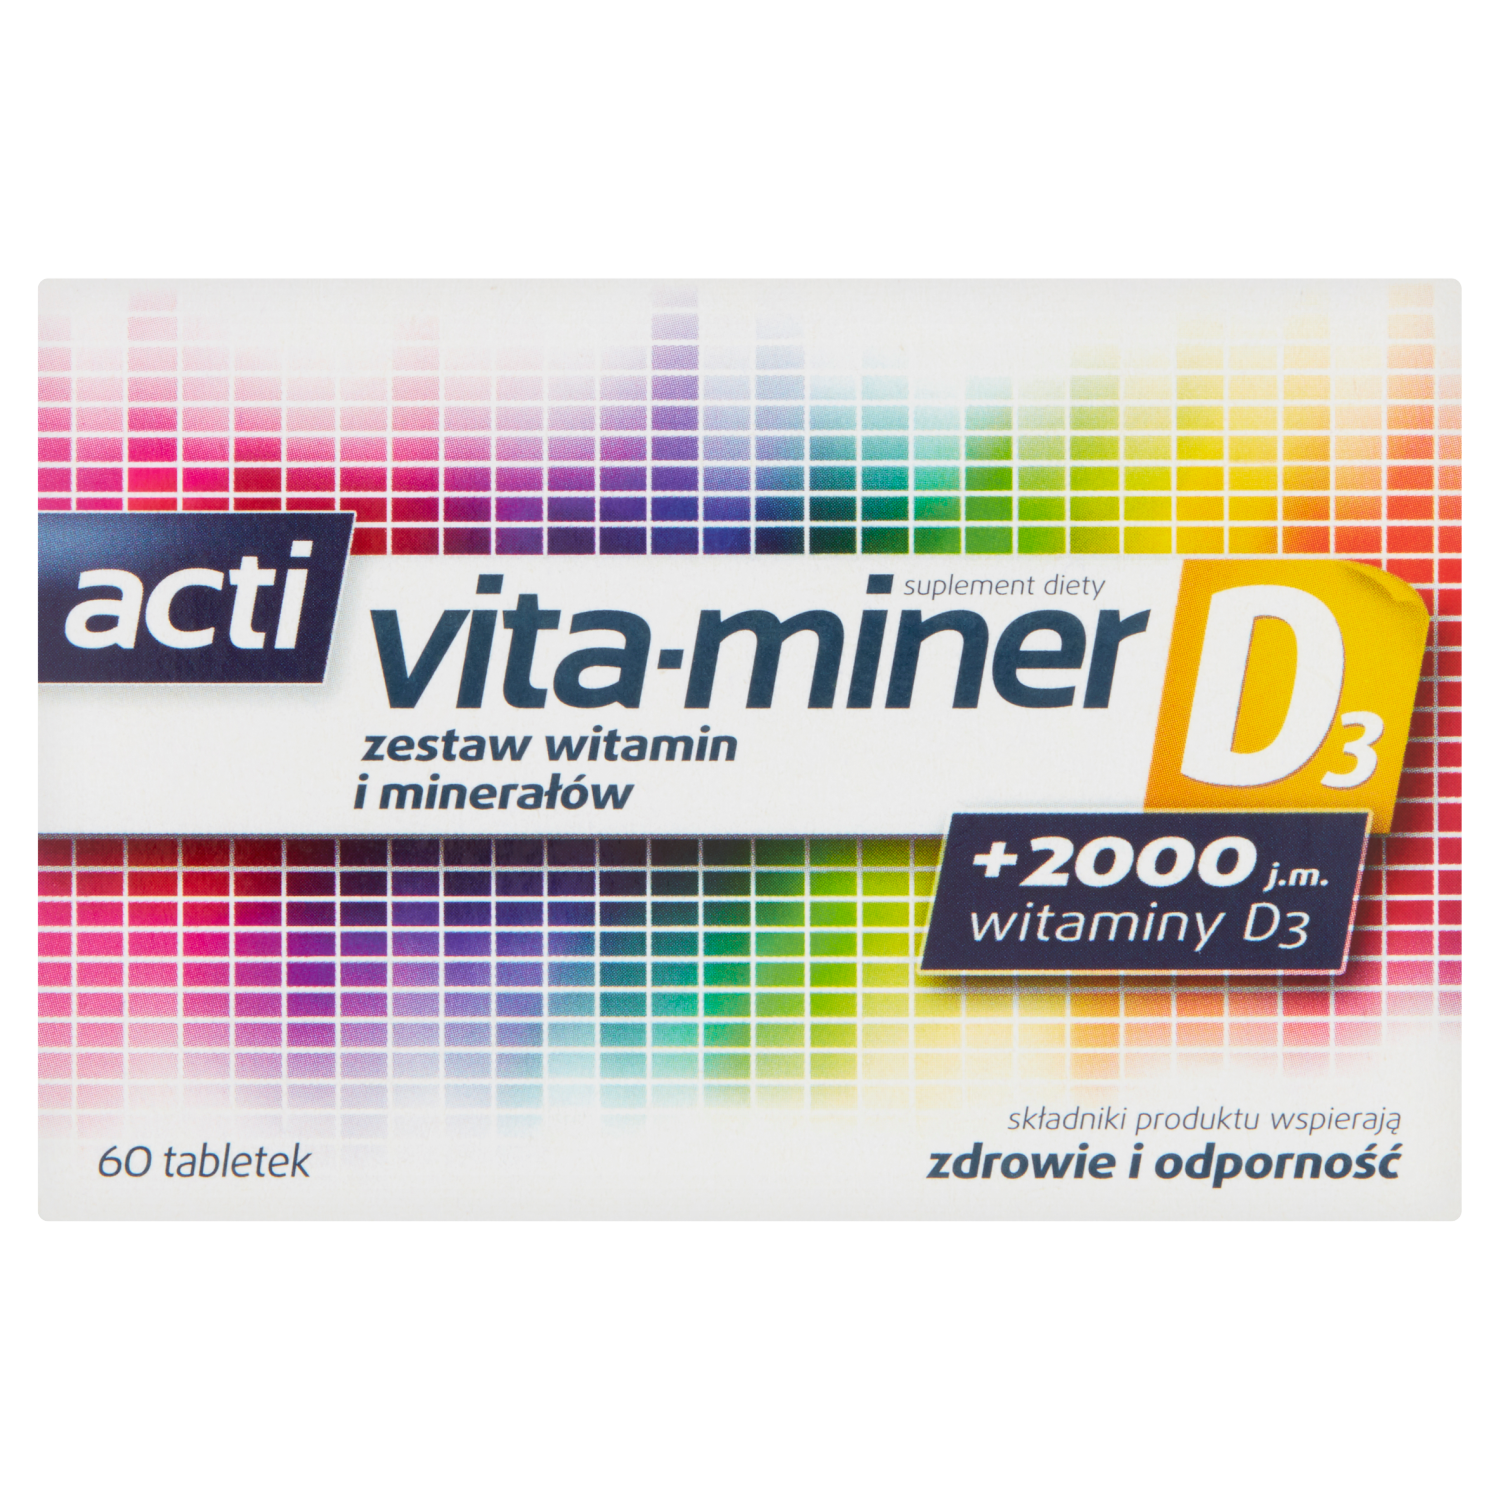 vita miner prenatal биологически активная добавка 60 таблеток 1 упаковка Acti Vita-Miner D3 биологически активная добавка, 60 таблеток/1 упаковка